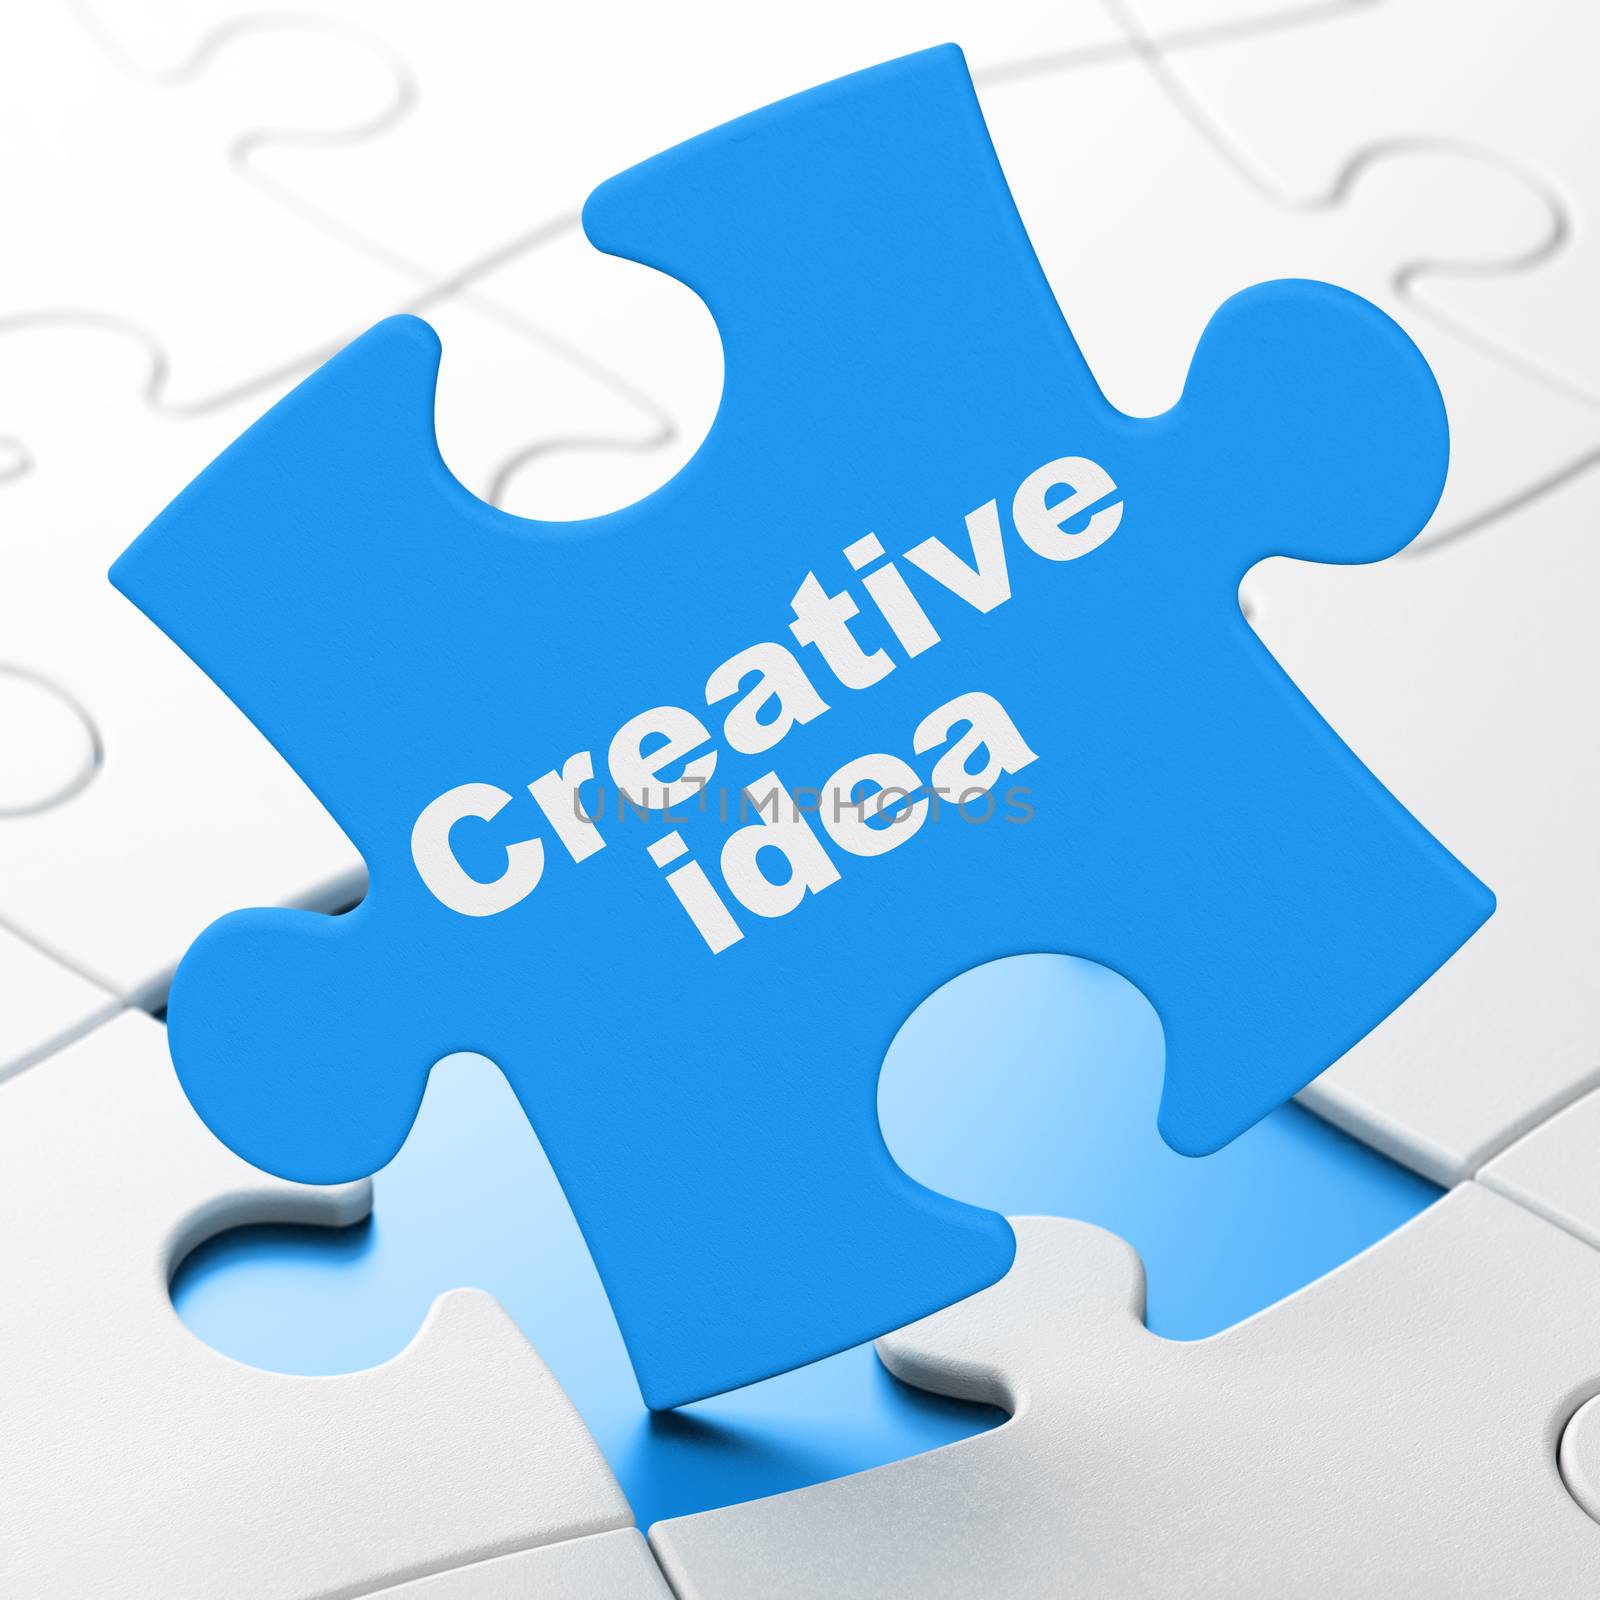 Business concept: Creative Idea on Blue puzzle pieces background, 3D rendering